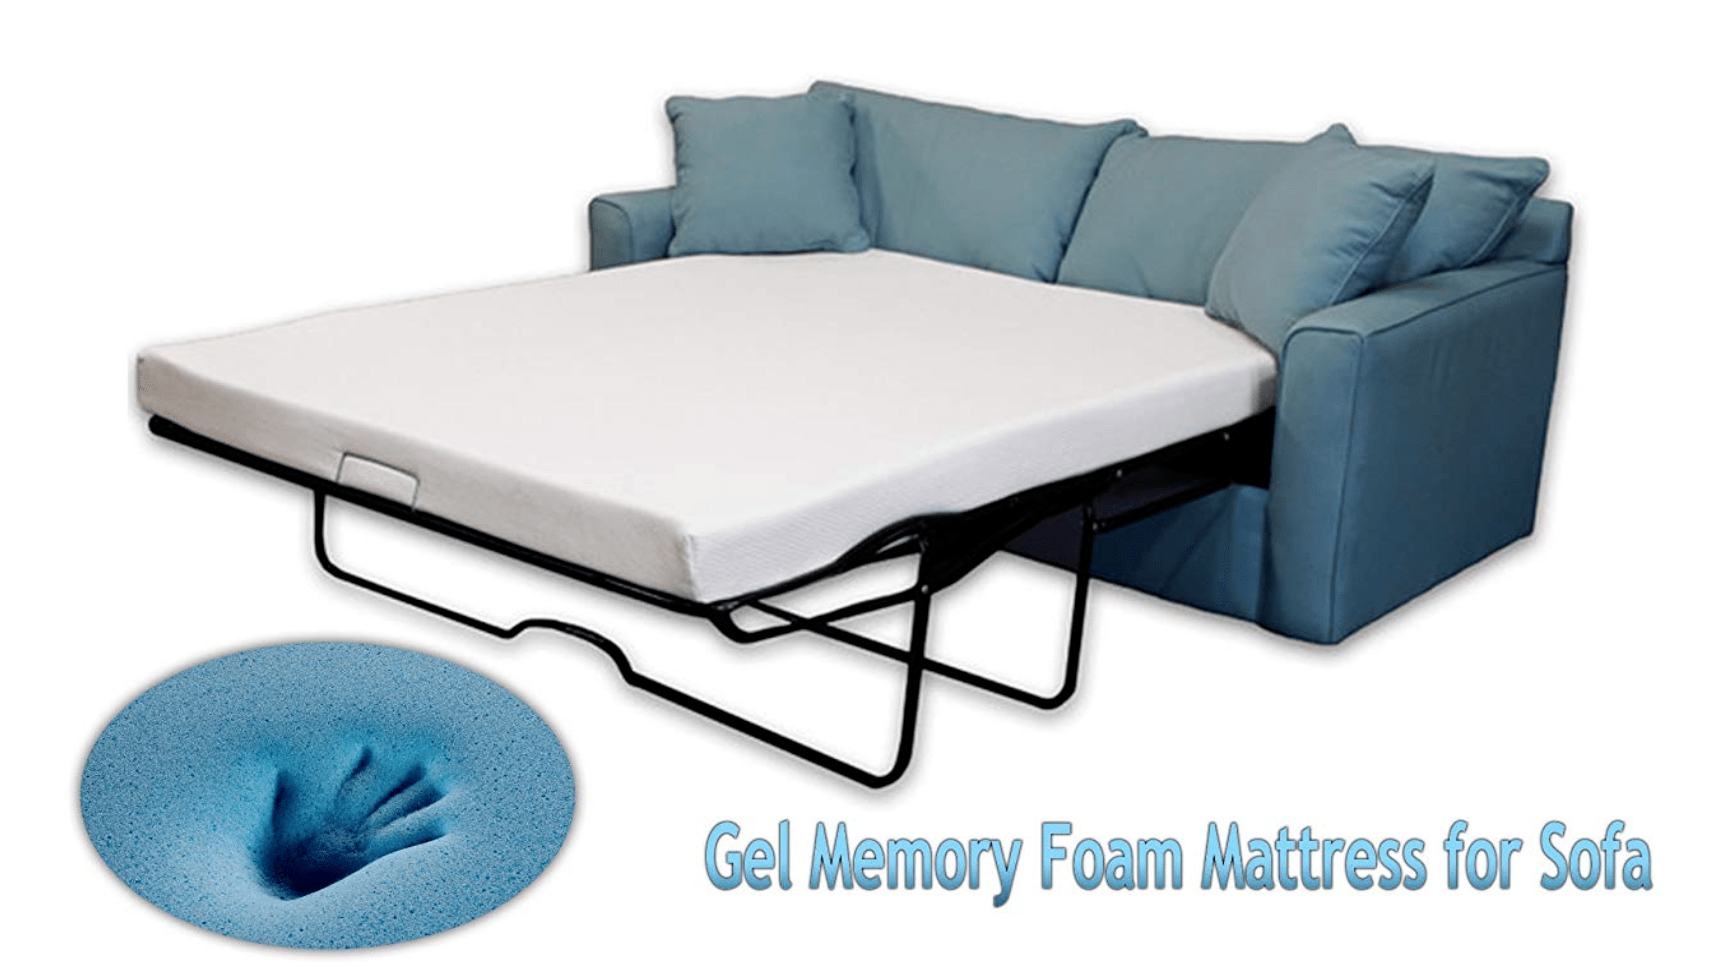 mattress for sofa bed 55 1 8x74